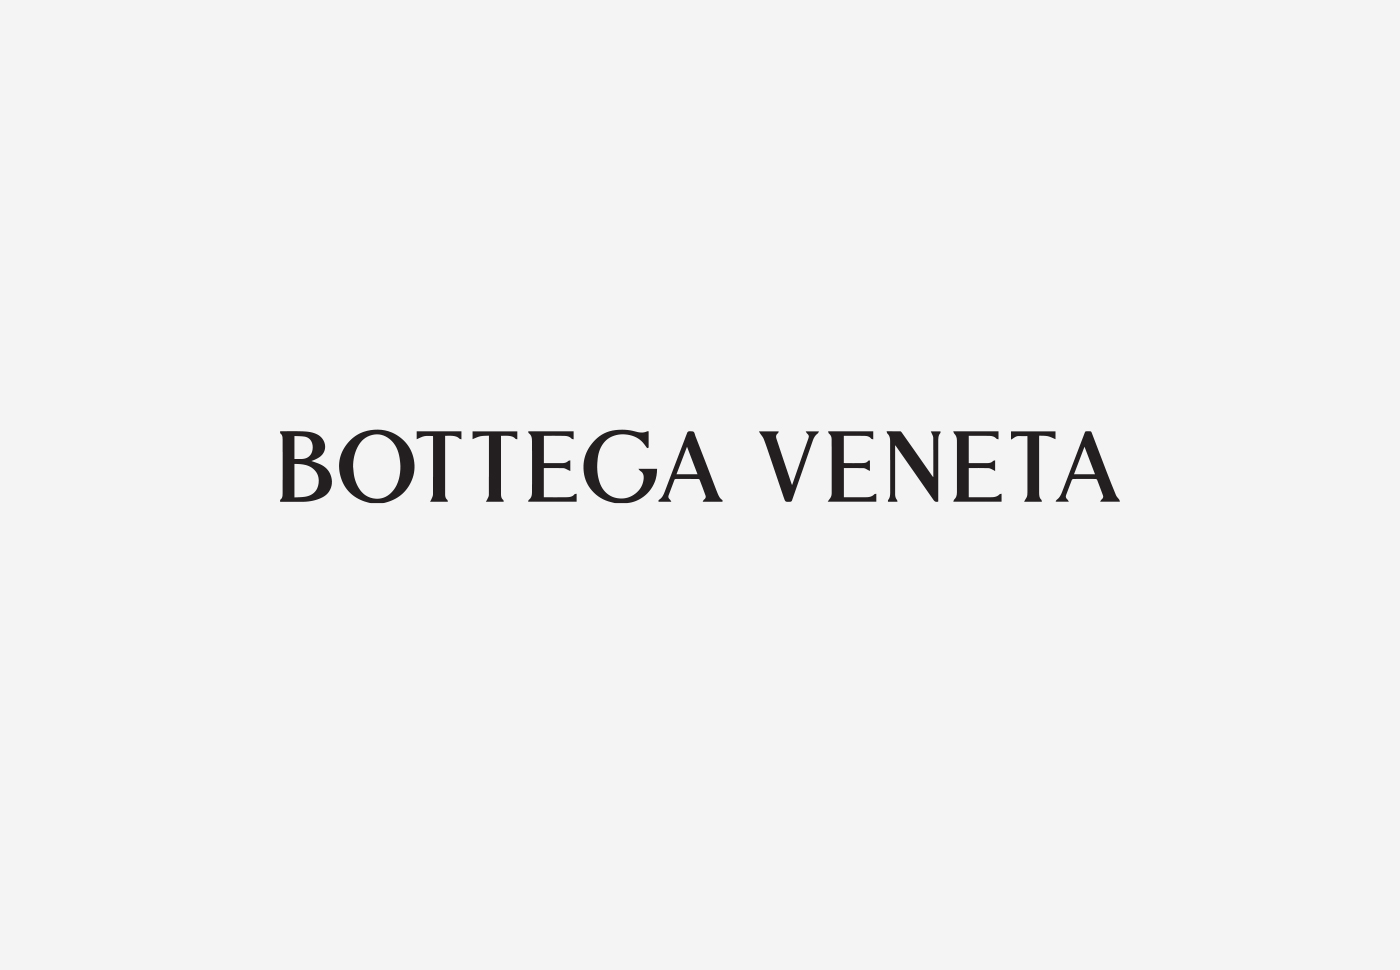 Bottega Veneta – Creative direction and design consulting